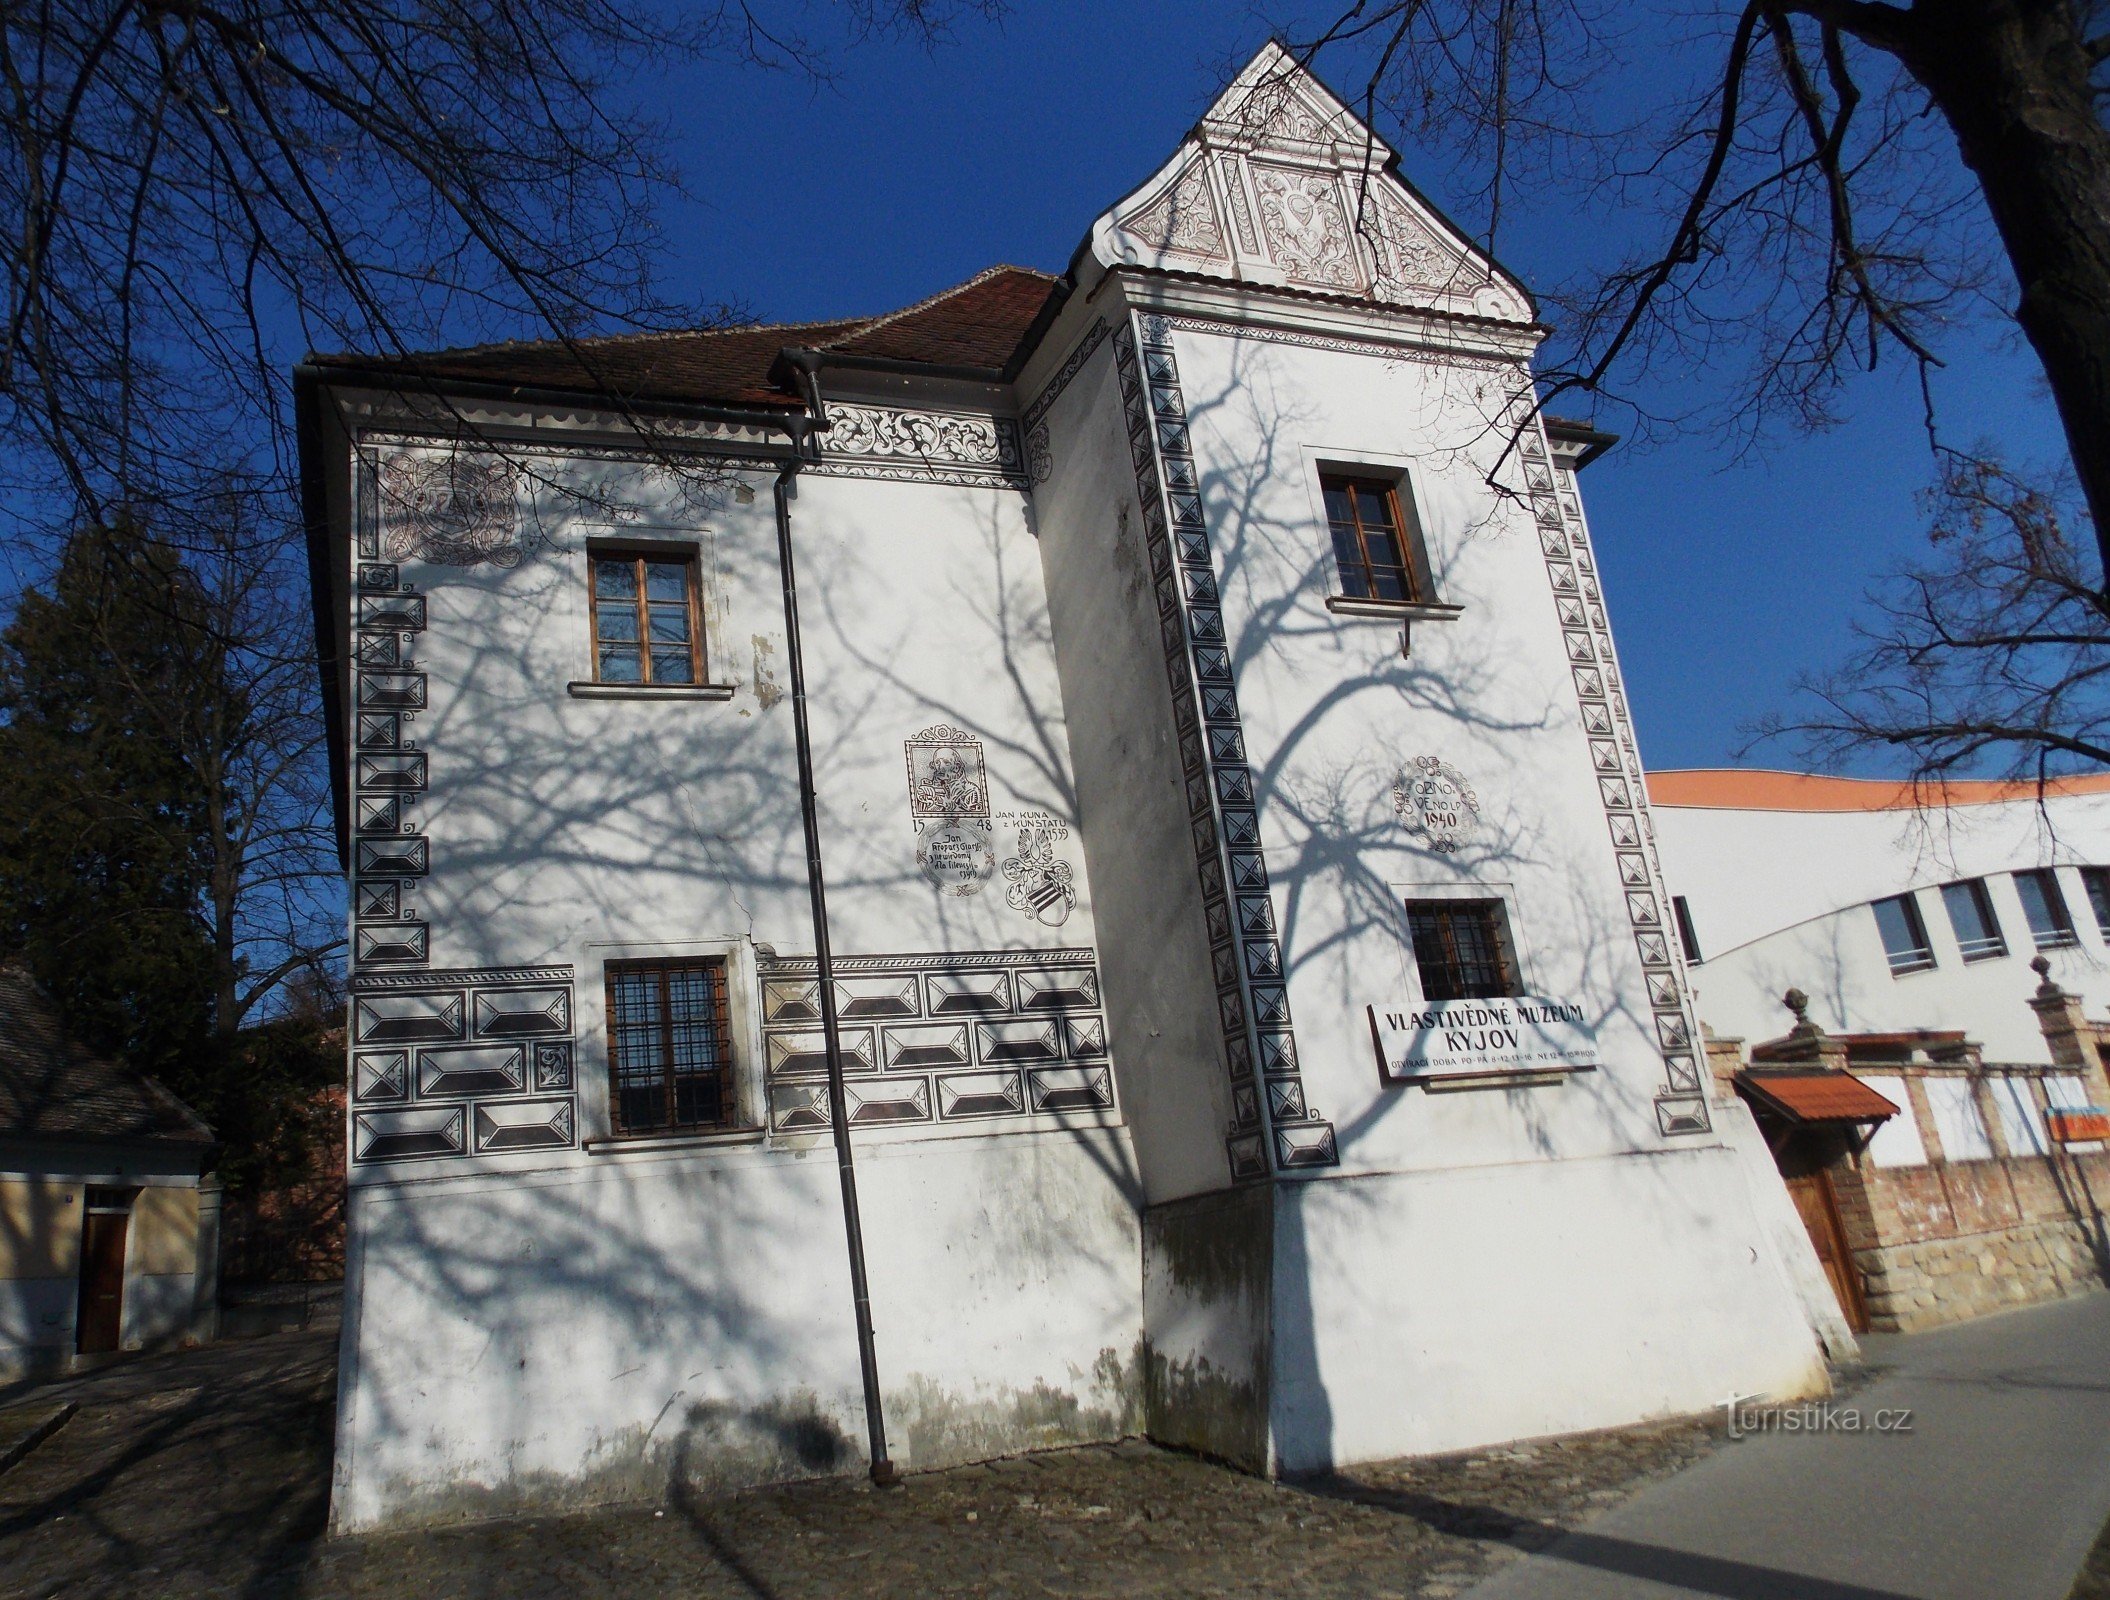 Renaissance castle building in Kyjov